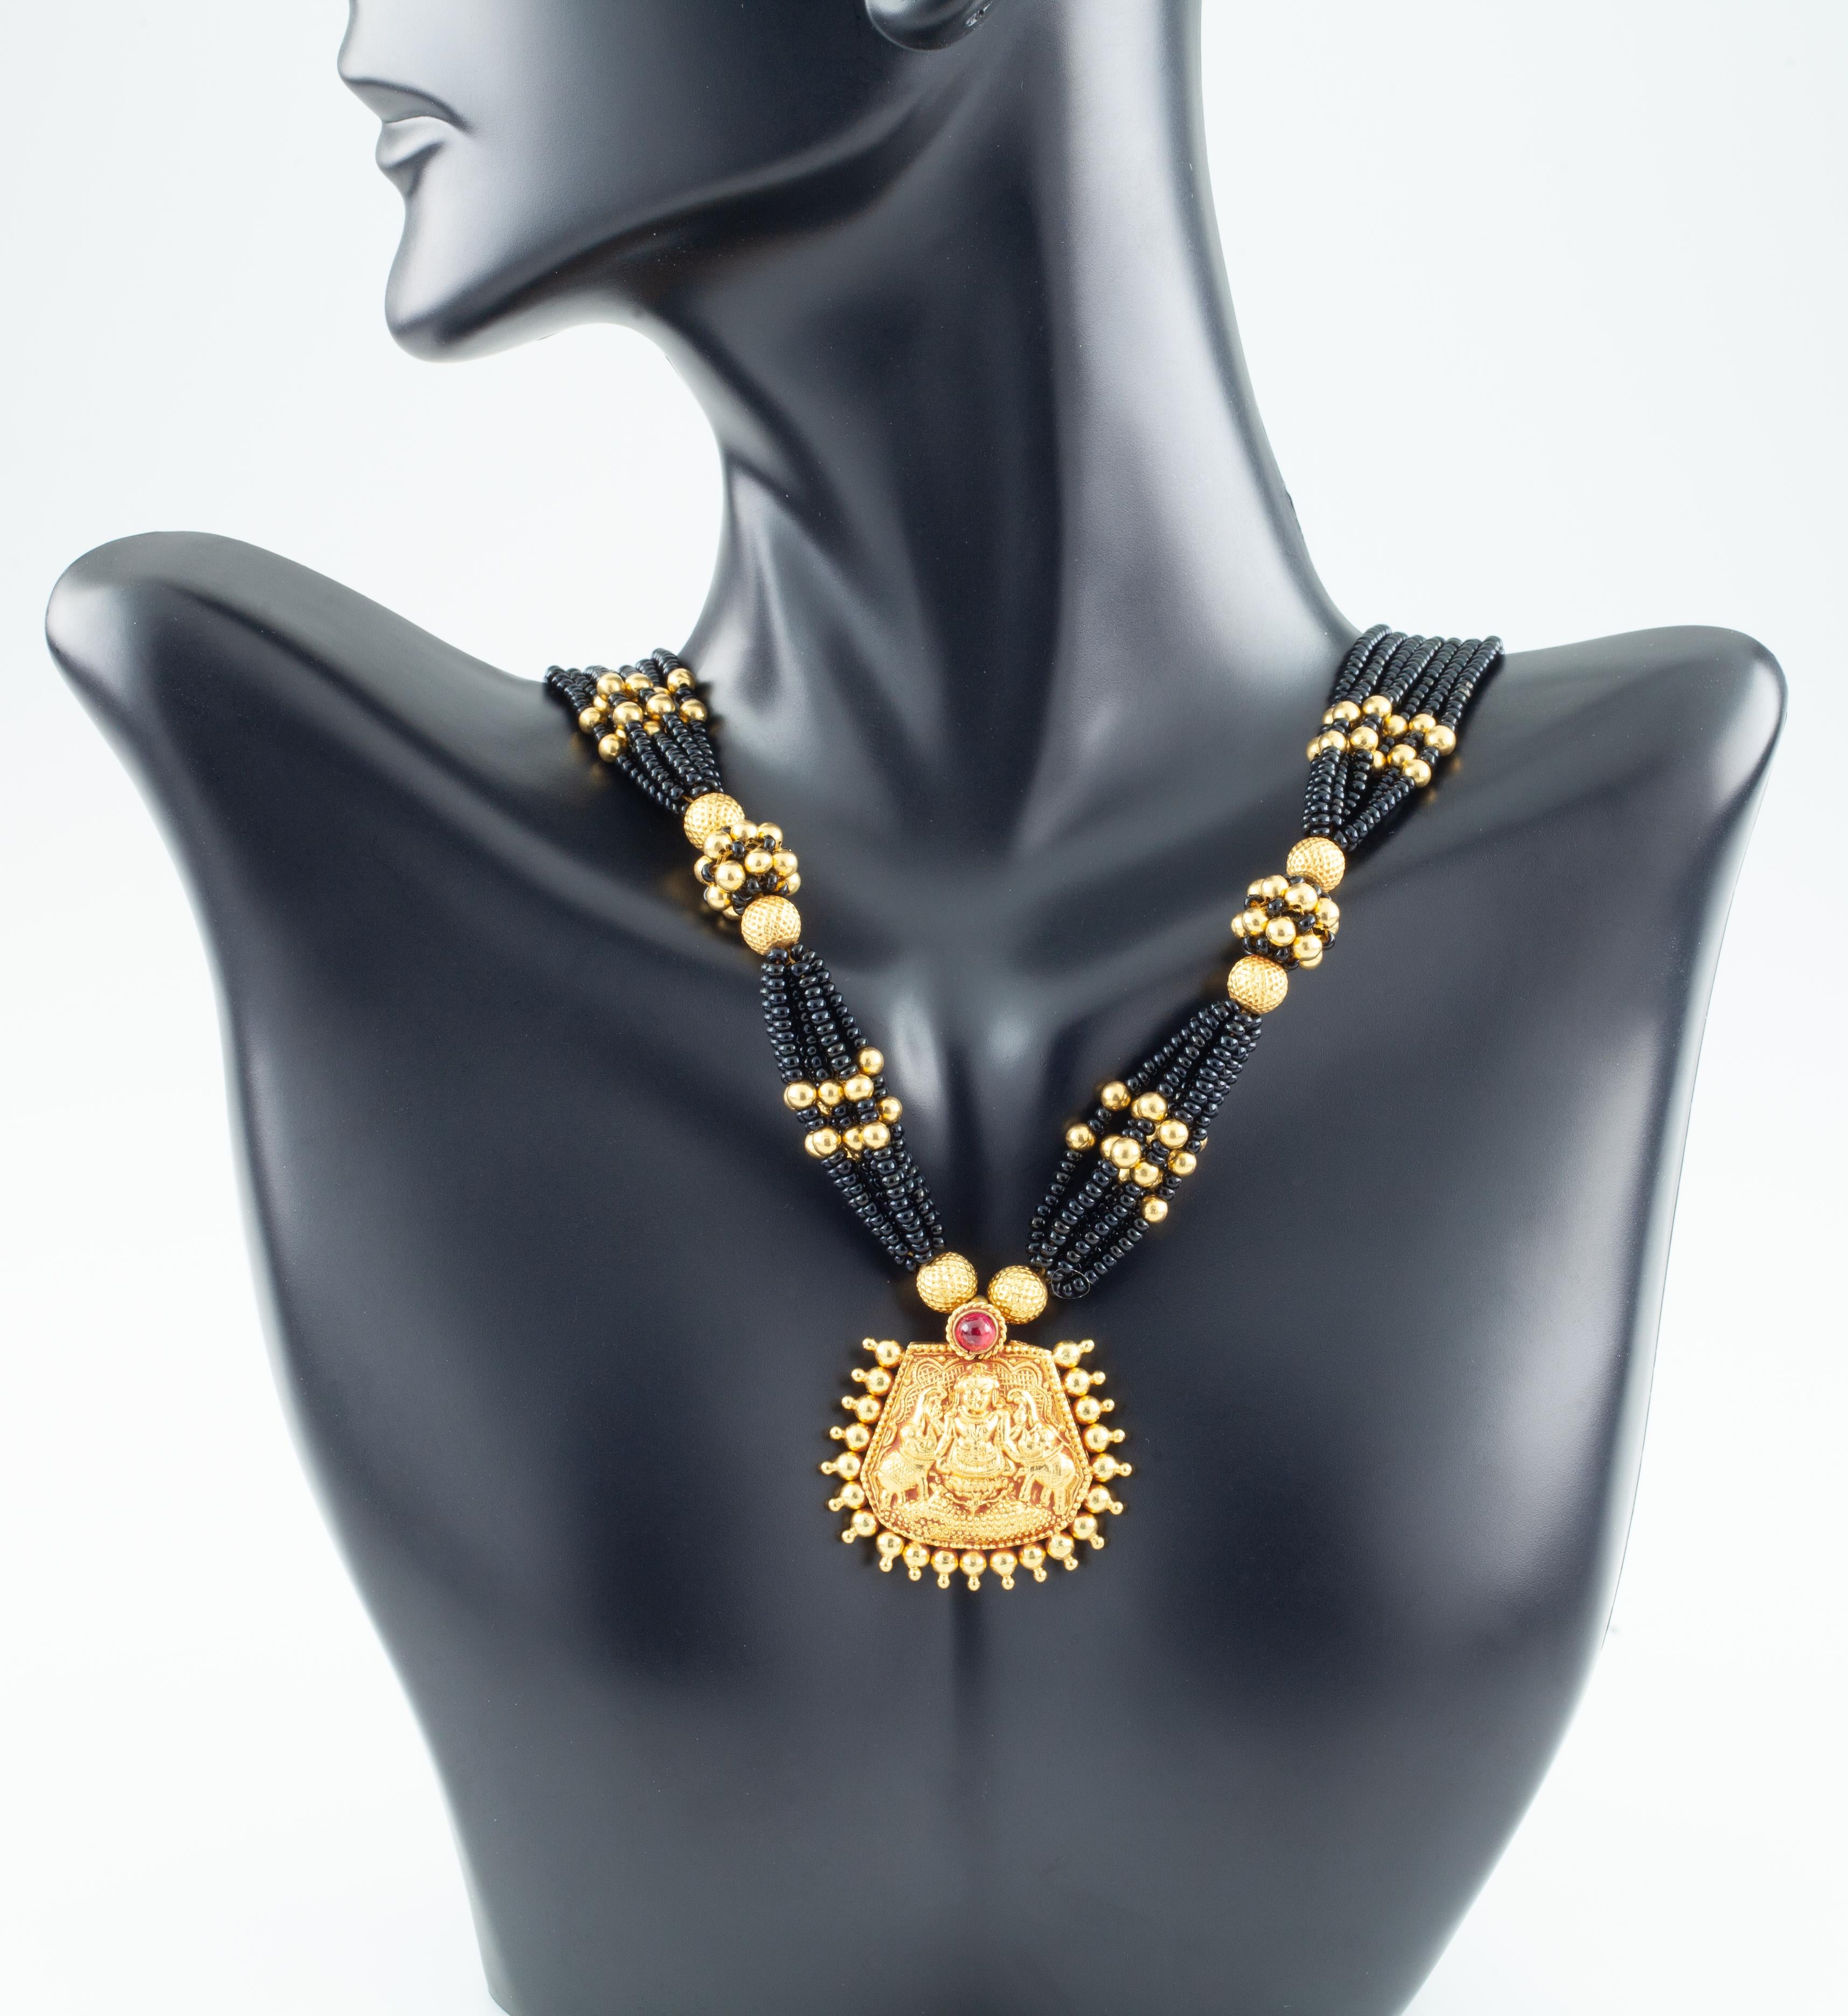 22 carat gold black bead necklace